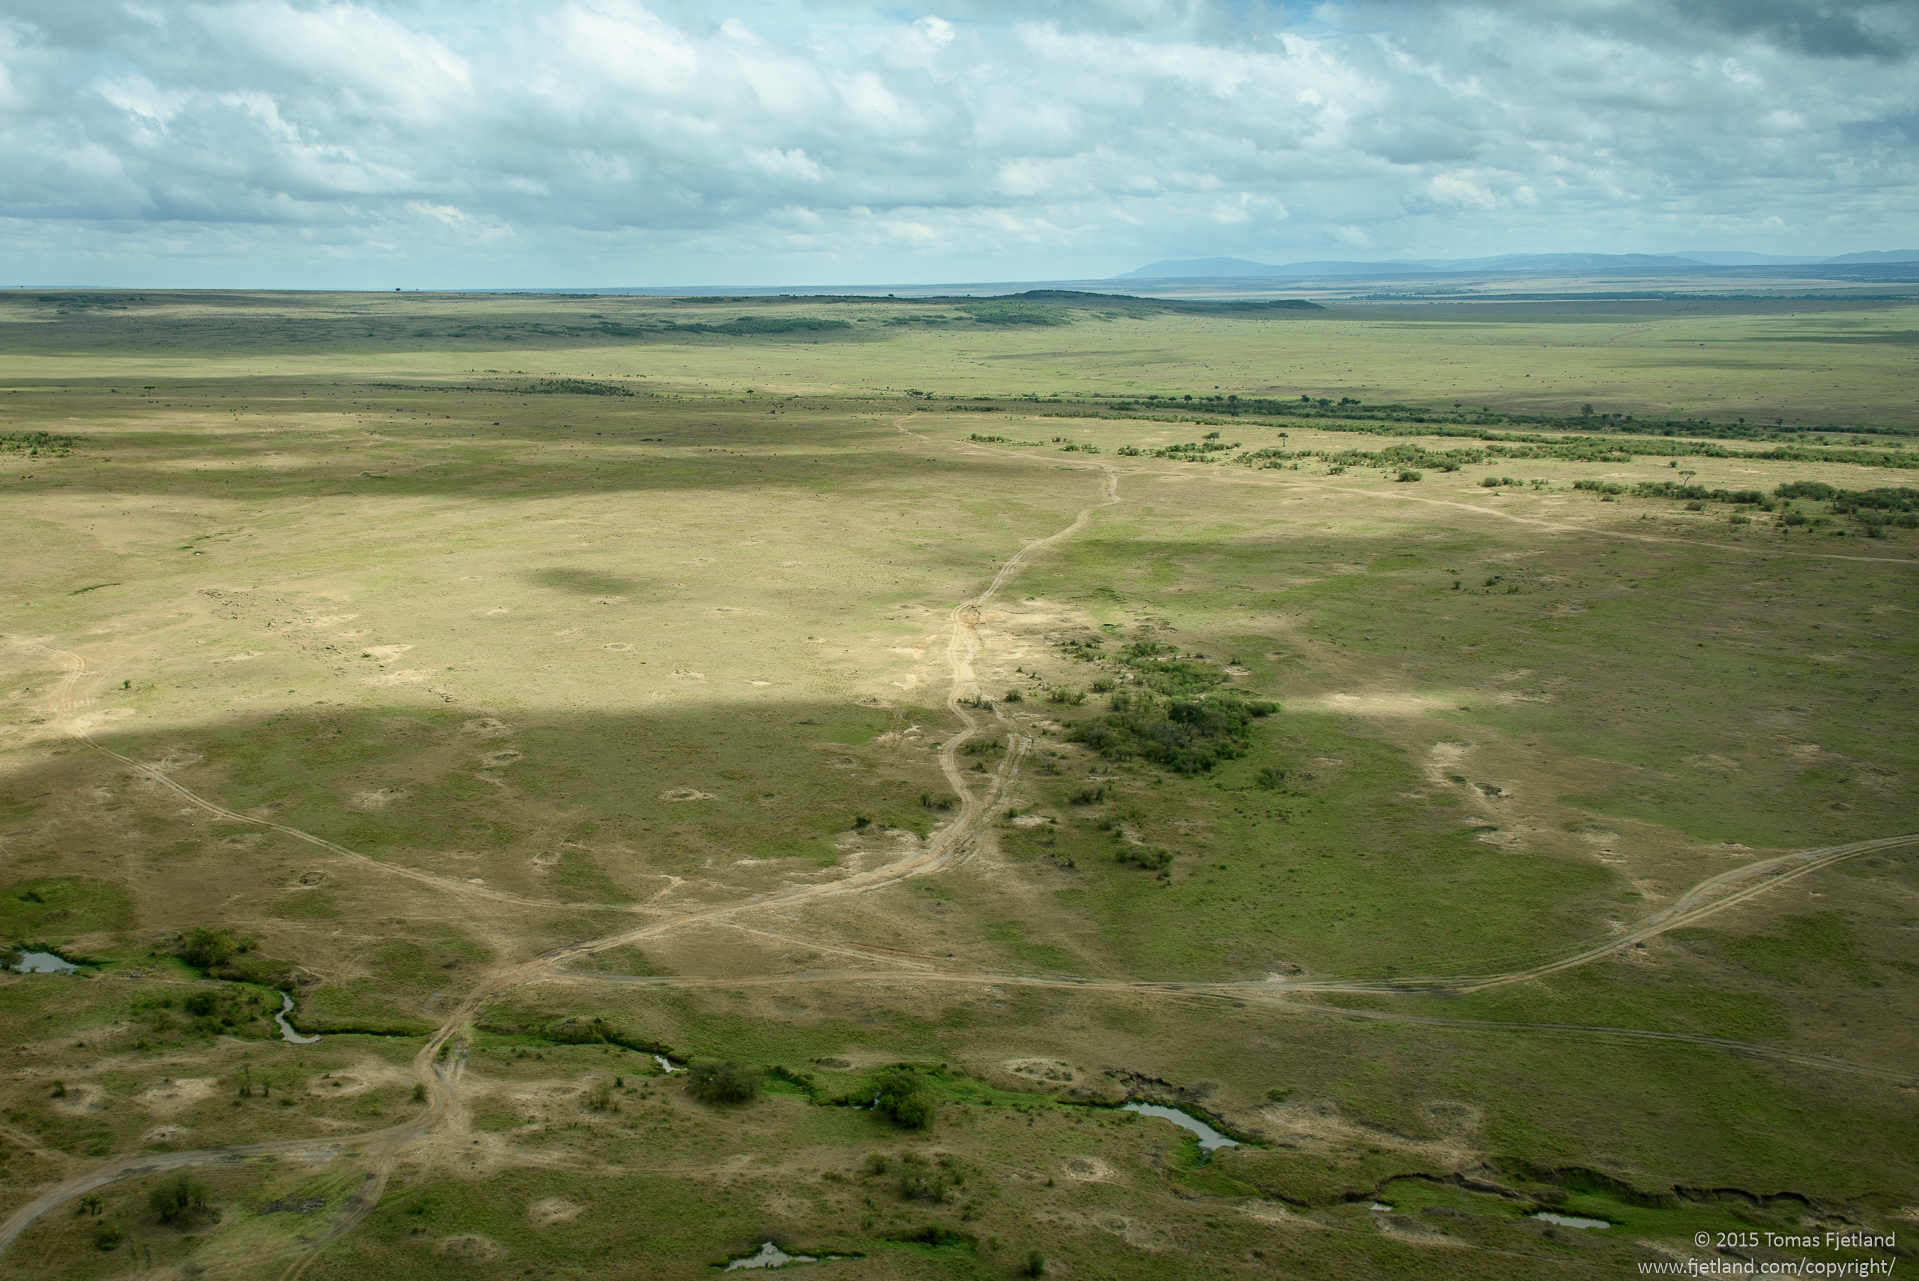 The green fields of the Masai Mara